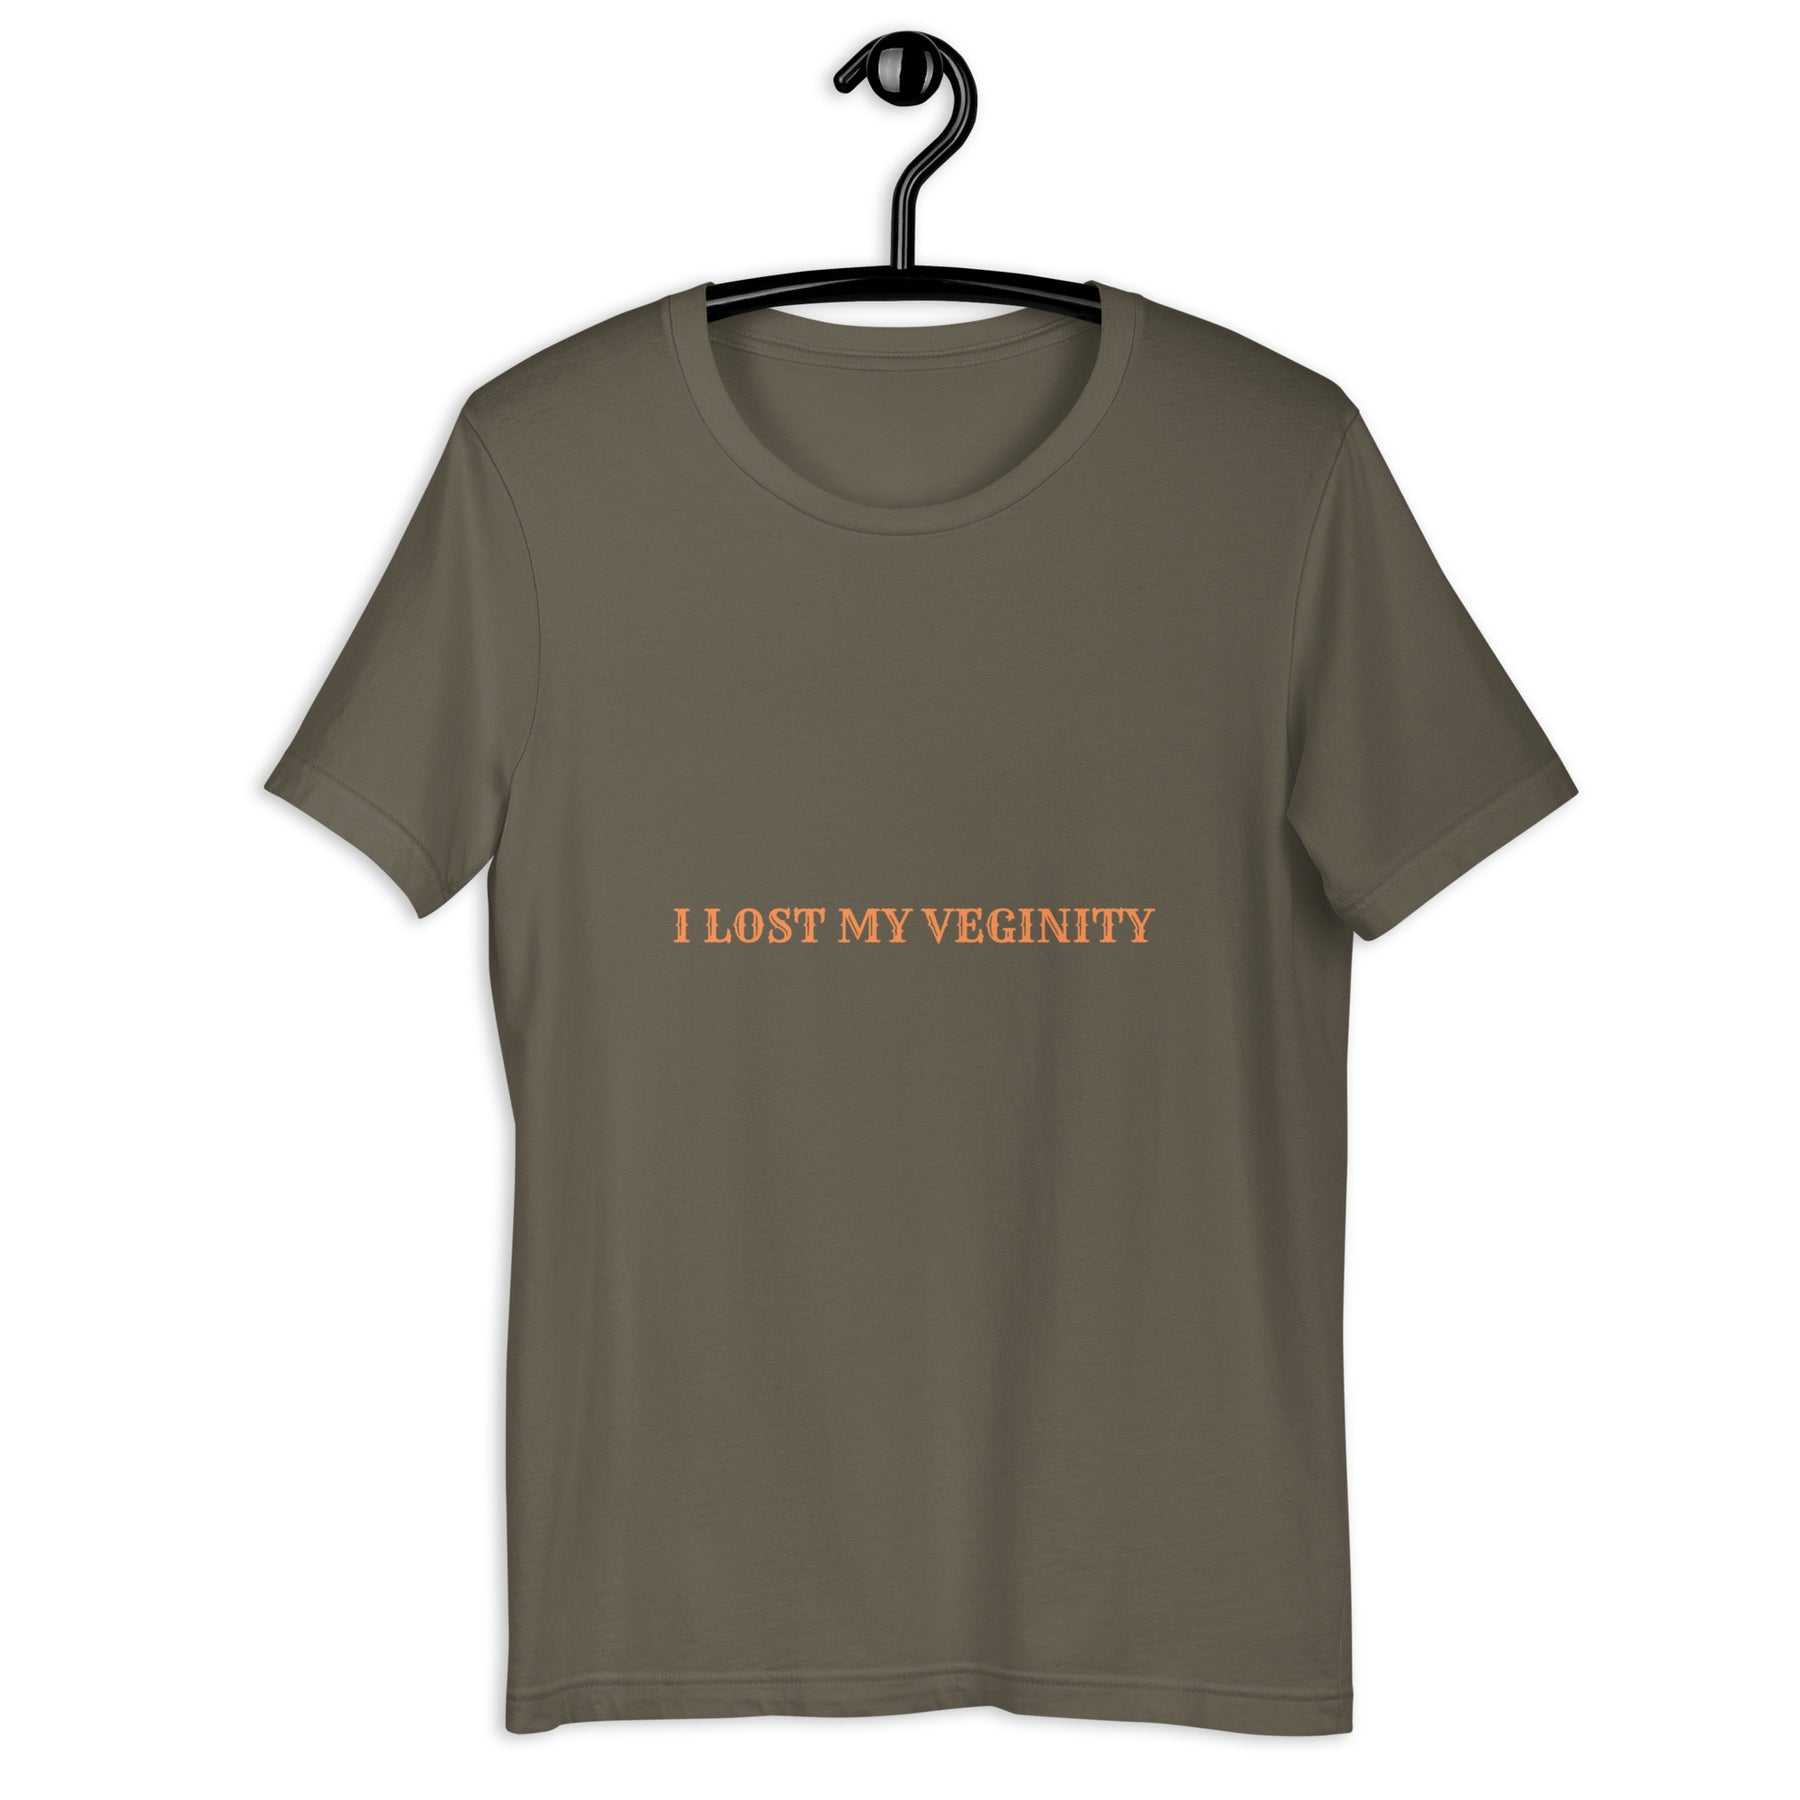 VEGINITY Colored t-shirt